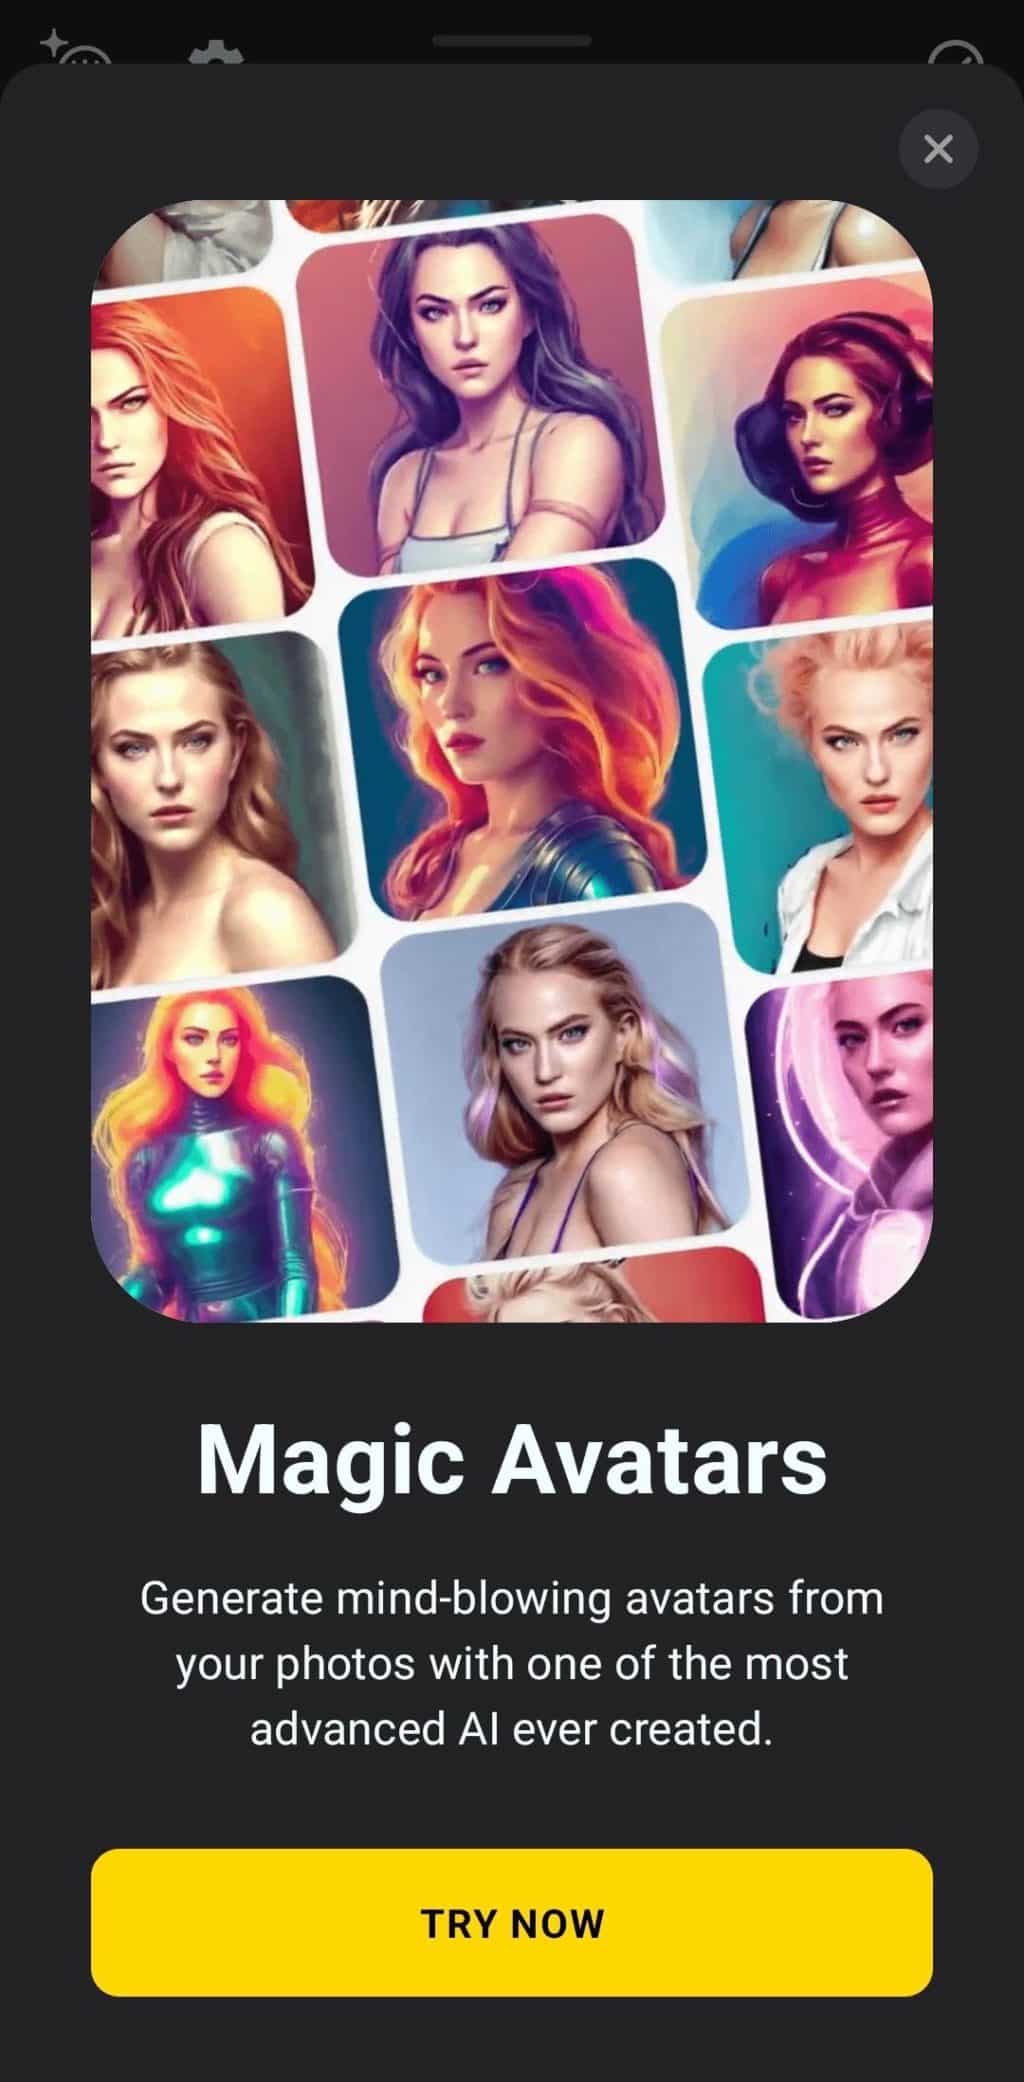 Lensa - Magic Avatars